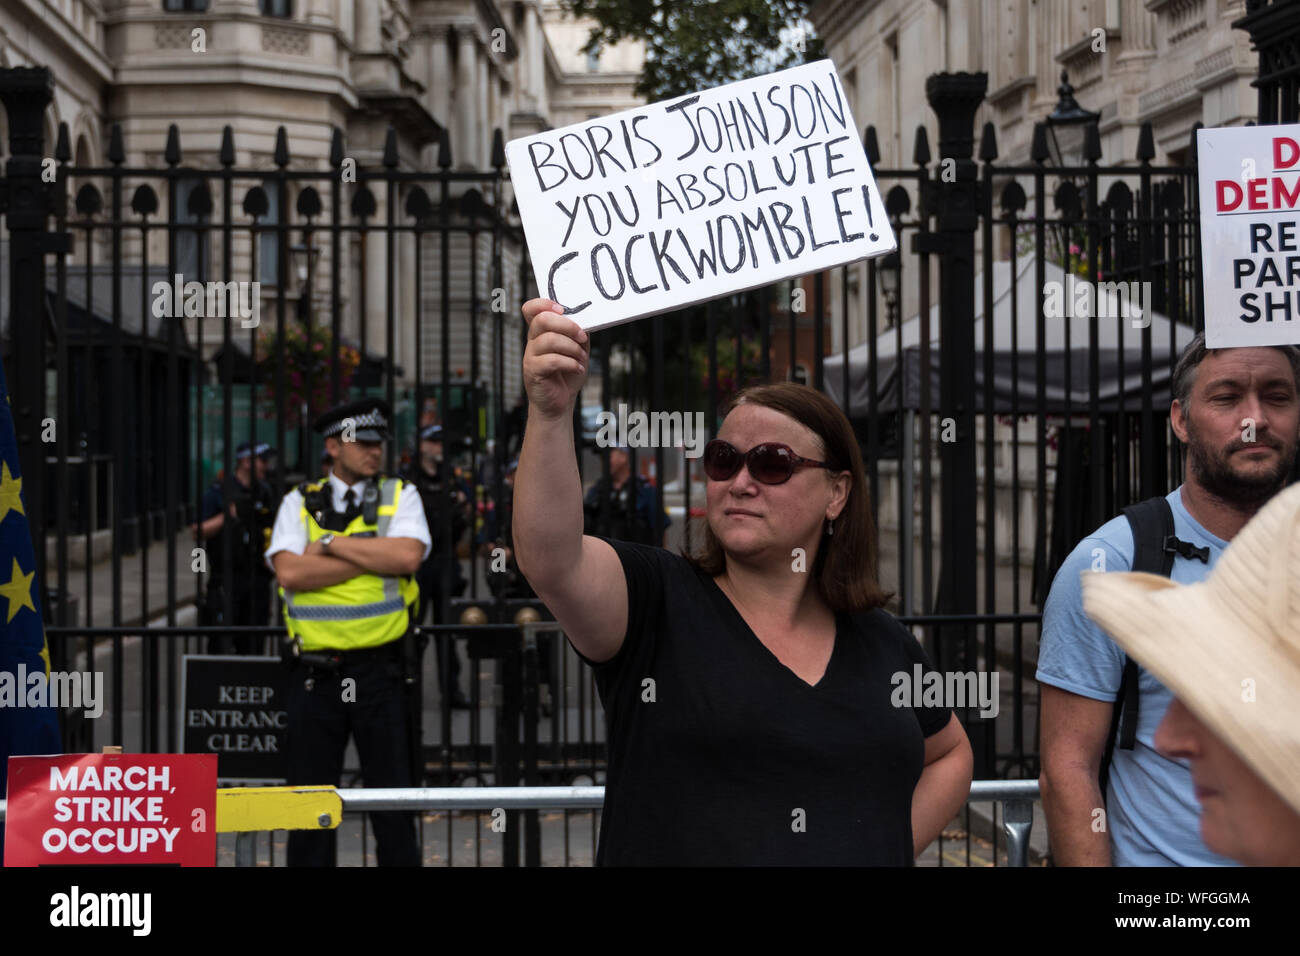 Anti Boris Johnson demonstration in front of Downing Street No 10, 31st Aug 2019, London UK Stock Photo